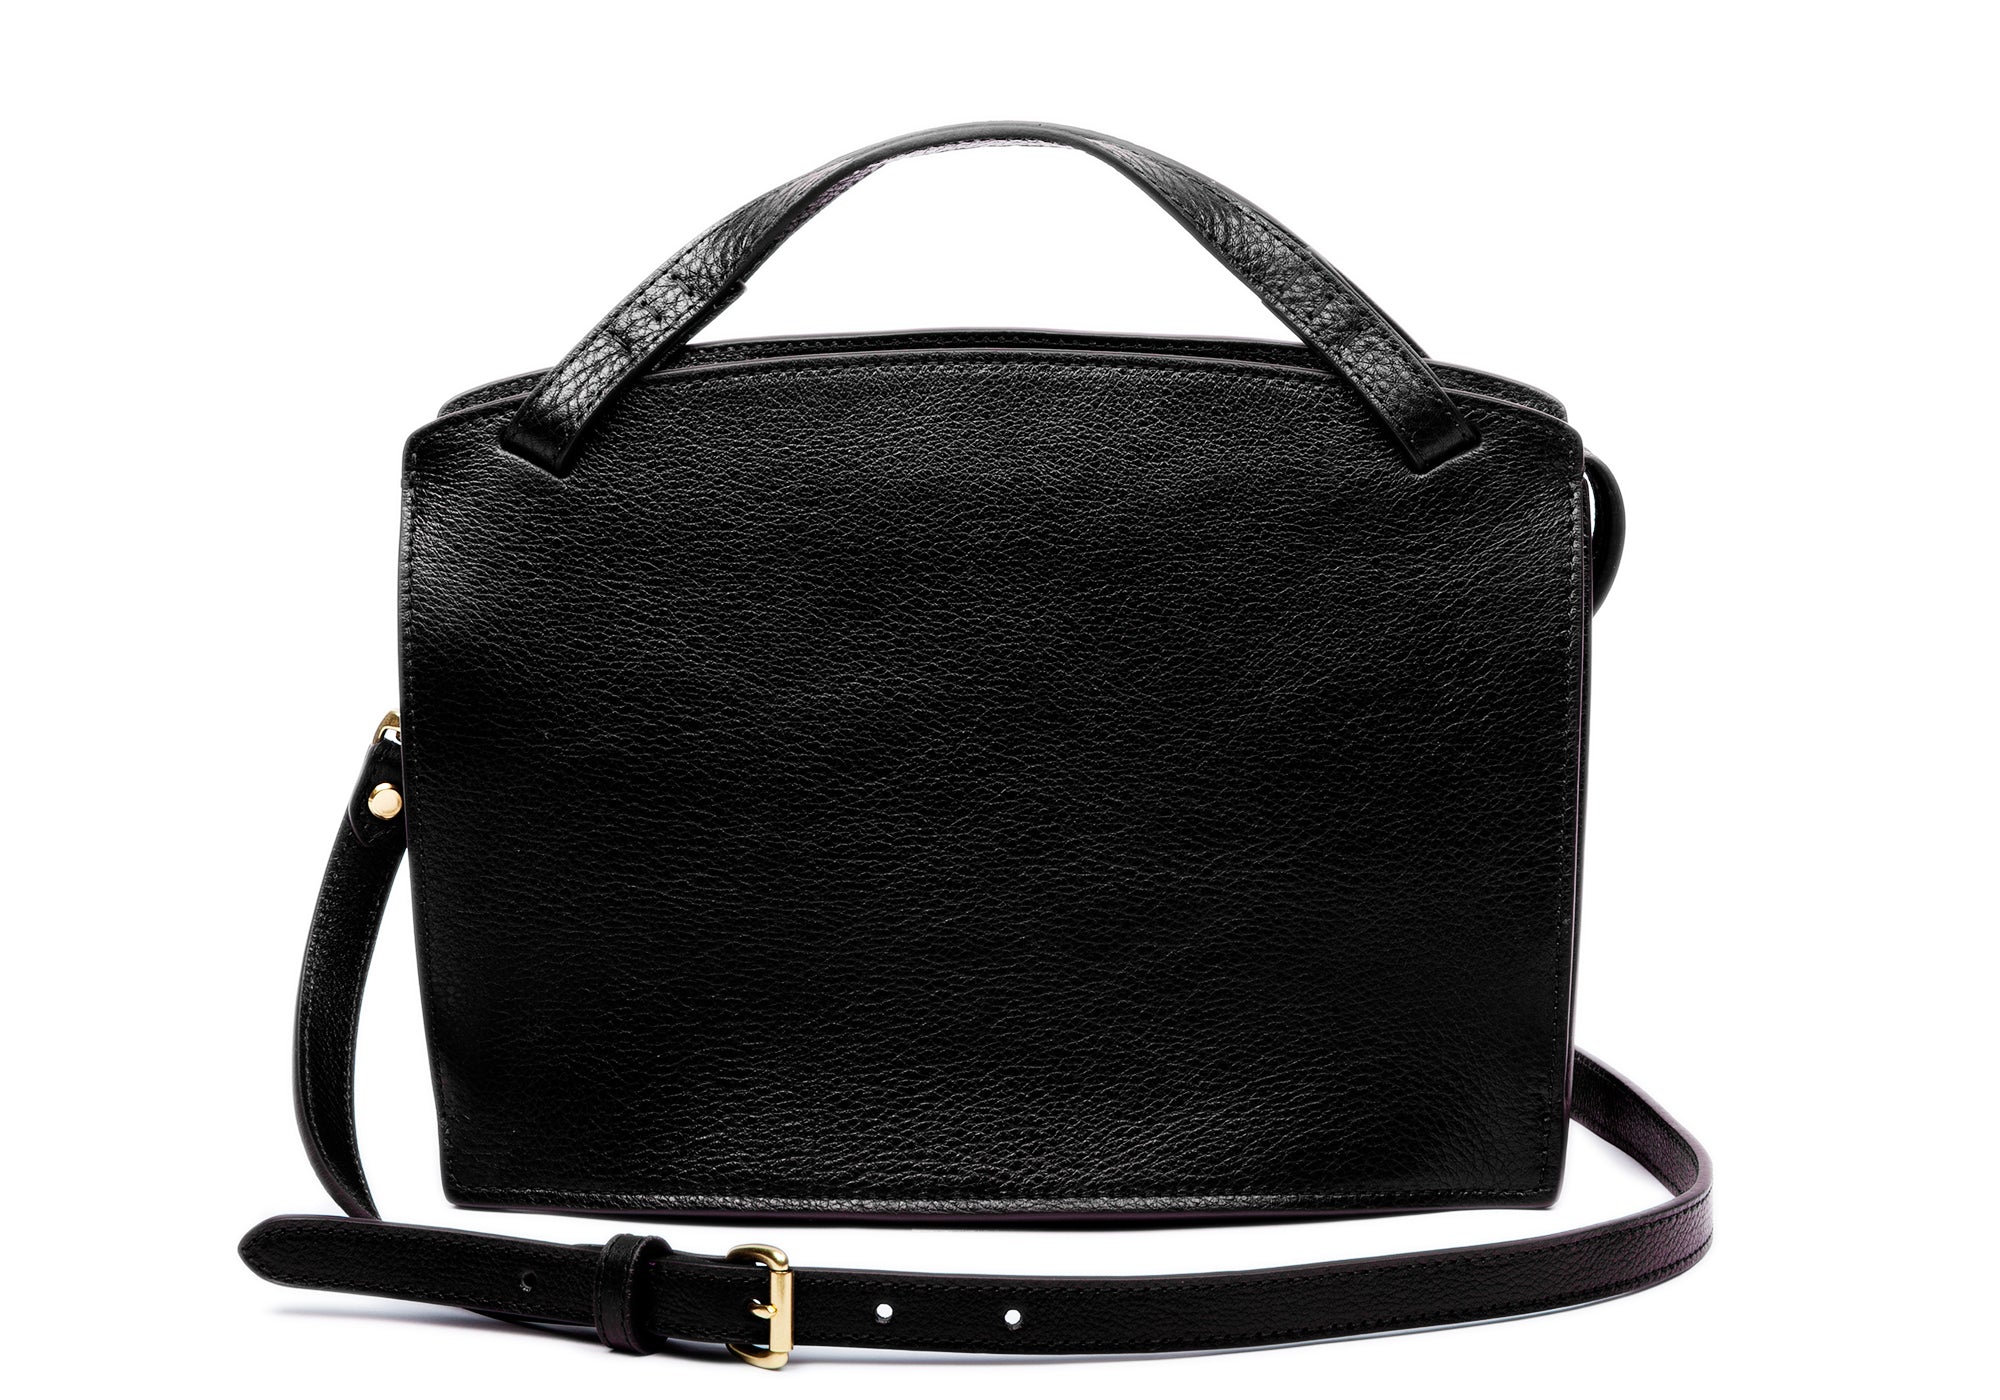 The Sol Handbag Black